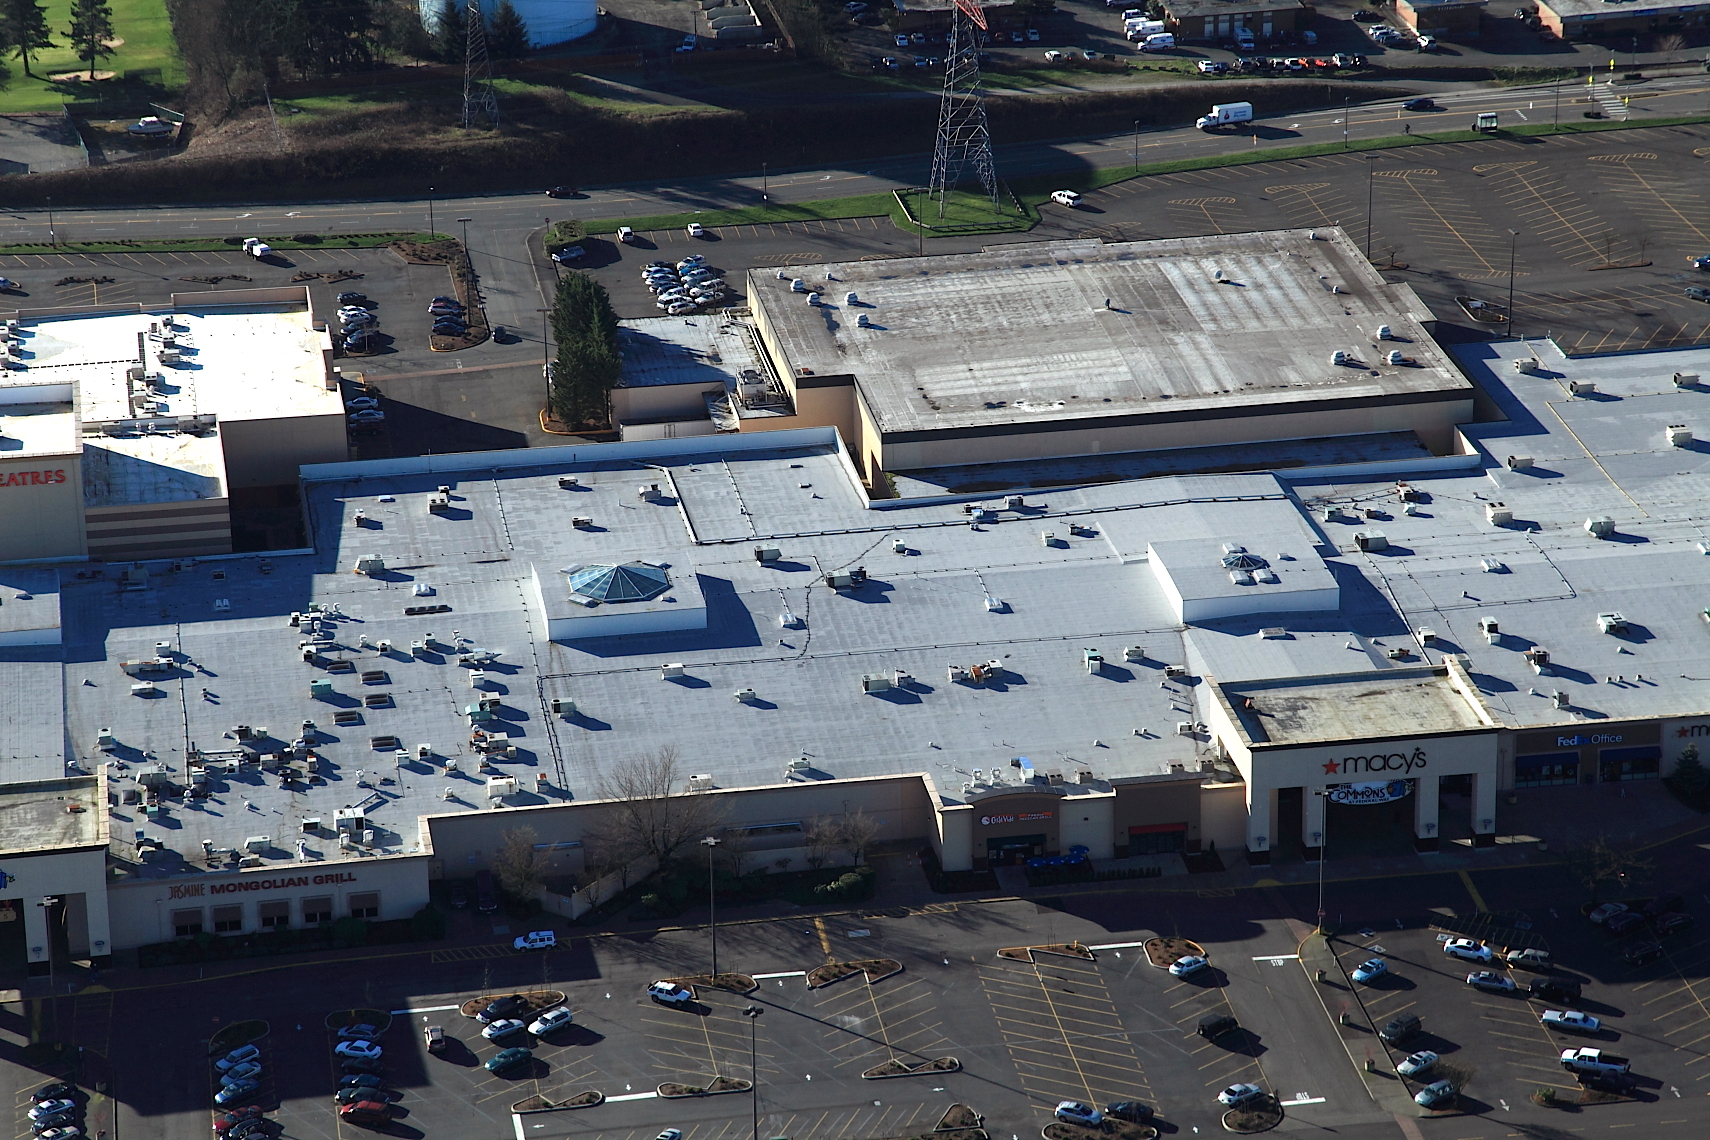 Aerial view of a Malarkey and Soprema Built-Up Hot Tar Roof at Everett mall.